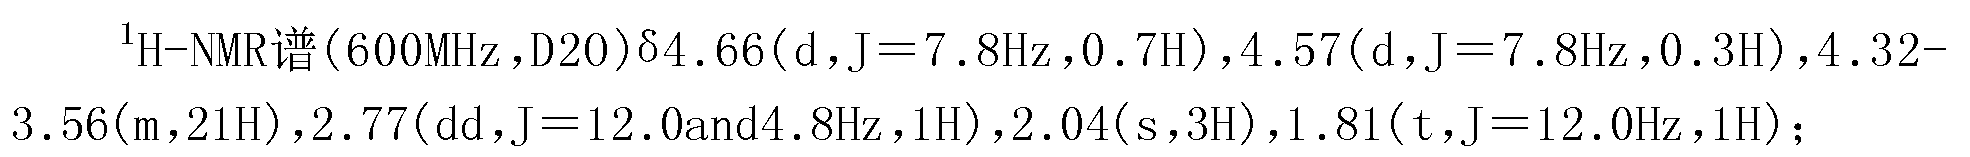 Preparation method of alpha-2,3-sialyllactulose